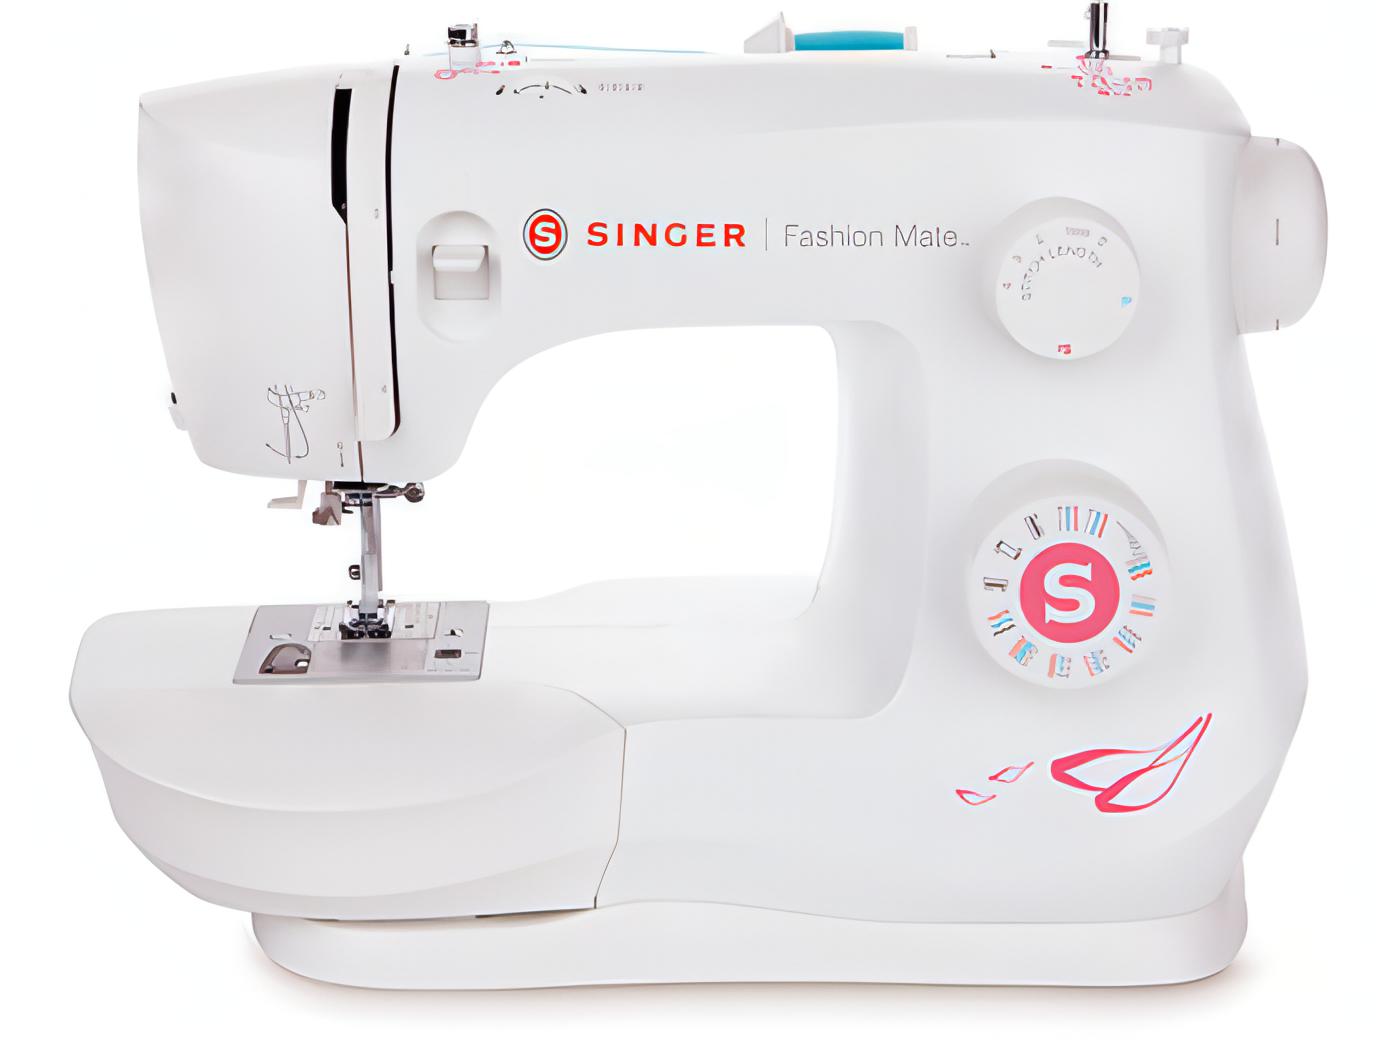 Singer Fashion Mate 3333 Sewing Machine with Drop-in Bobbin